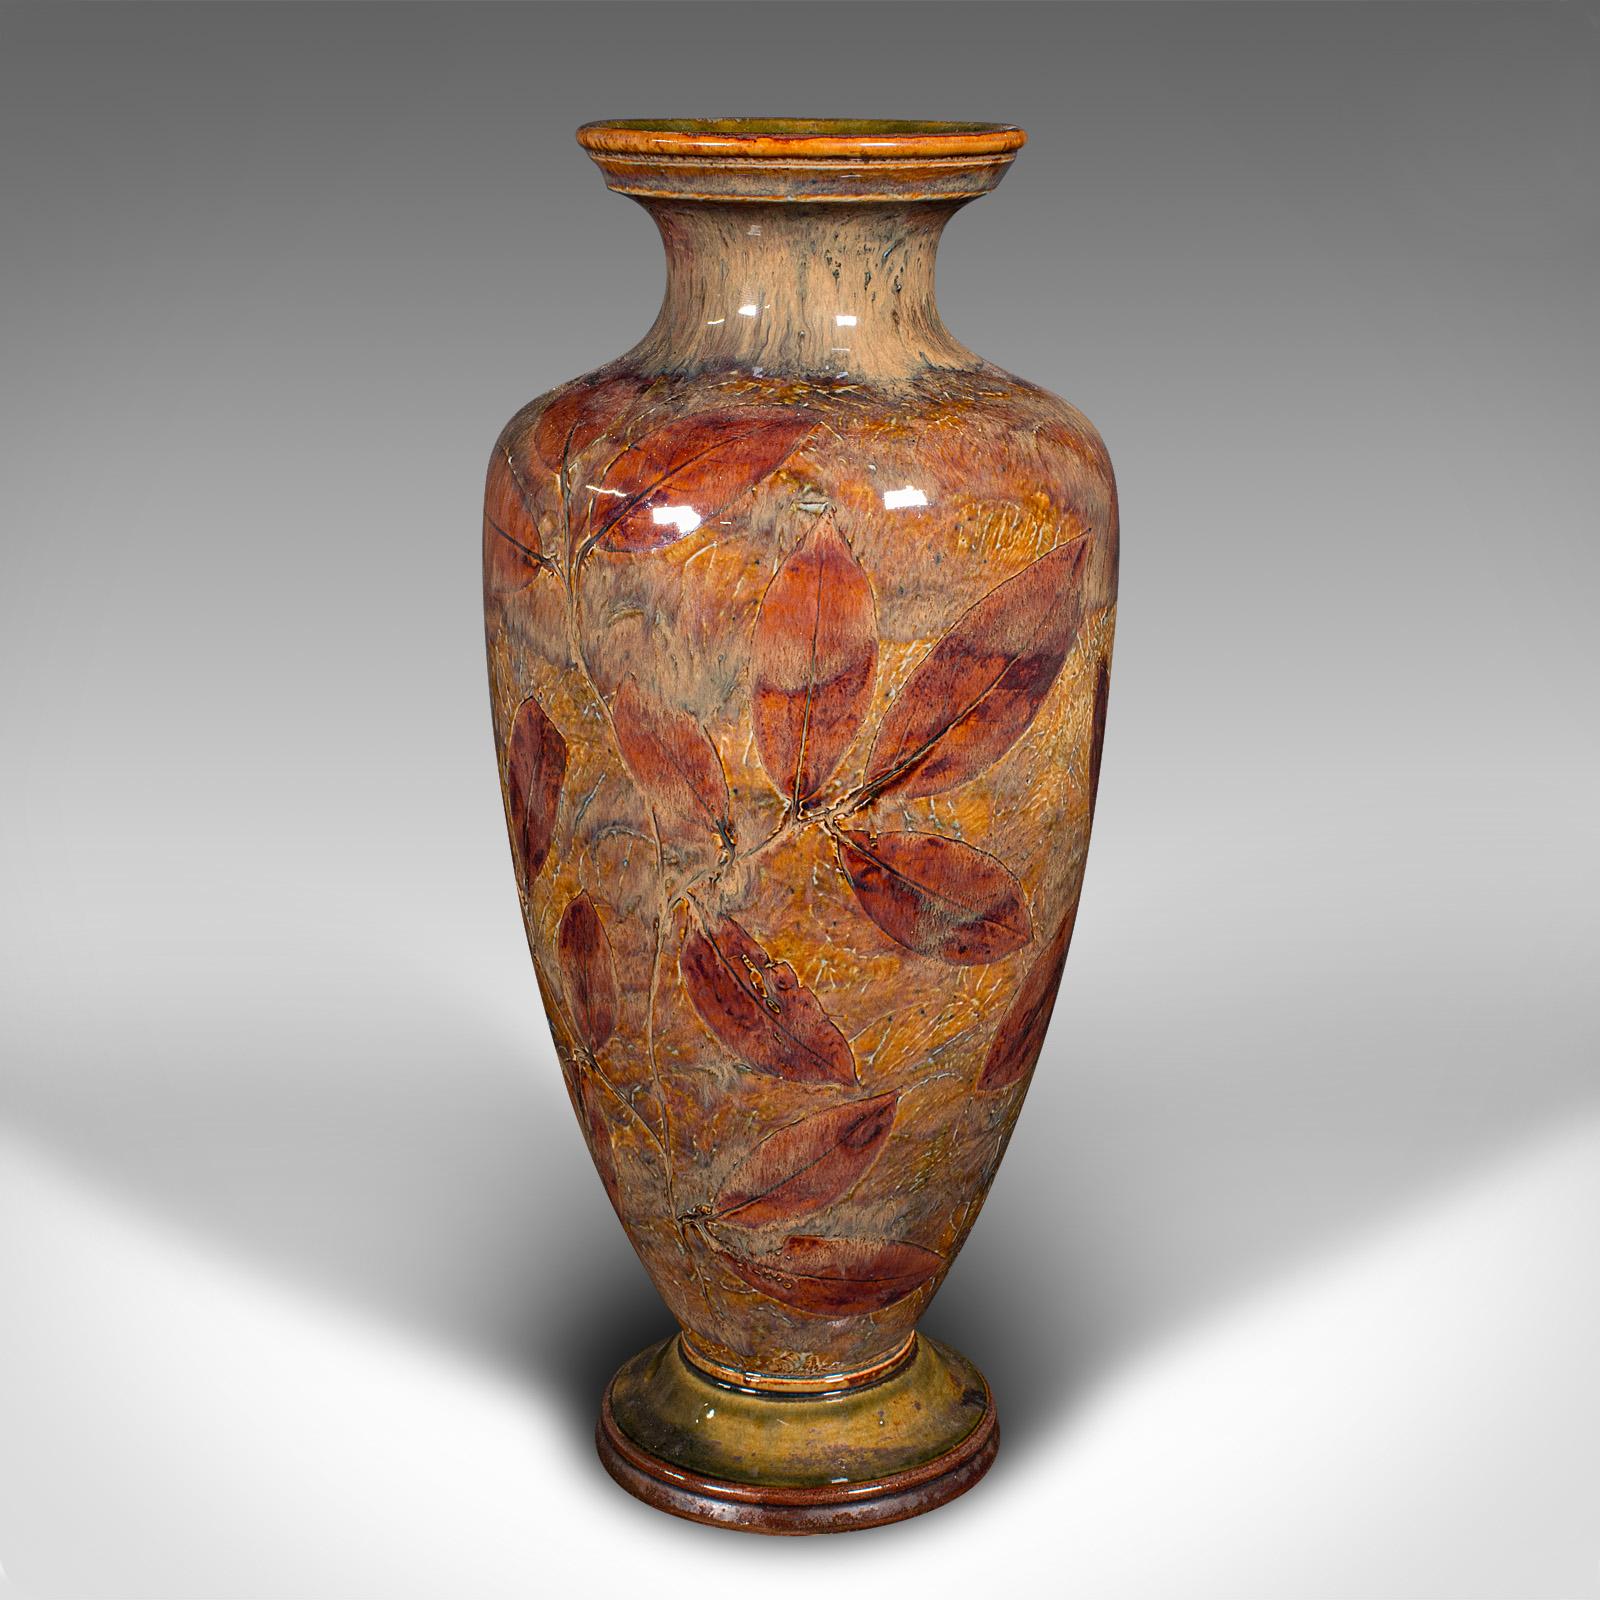 Antique Pair Of Decorative Vases, English, Ceramic Flower Urn, Edwardian, C.1910 In Good Condition For Sale In Hele, Devon, GB